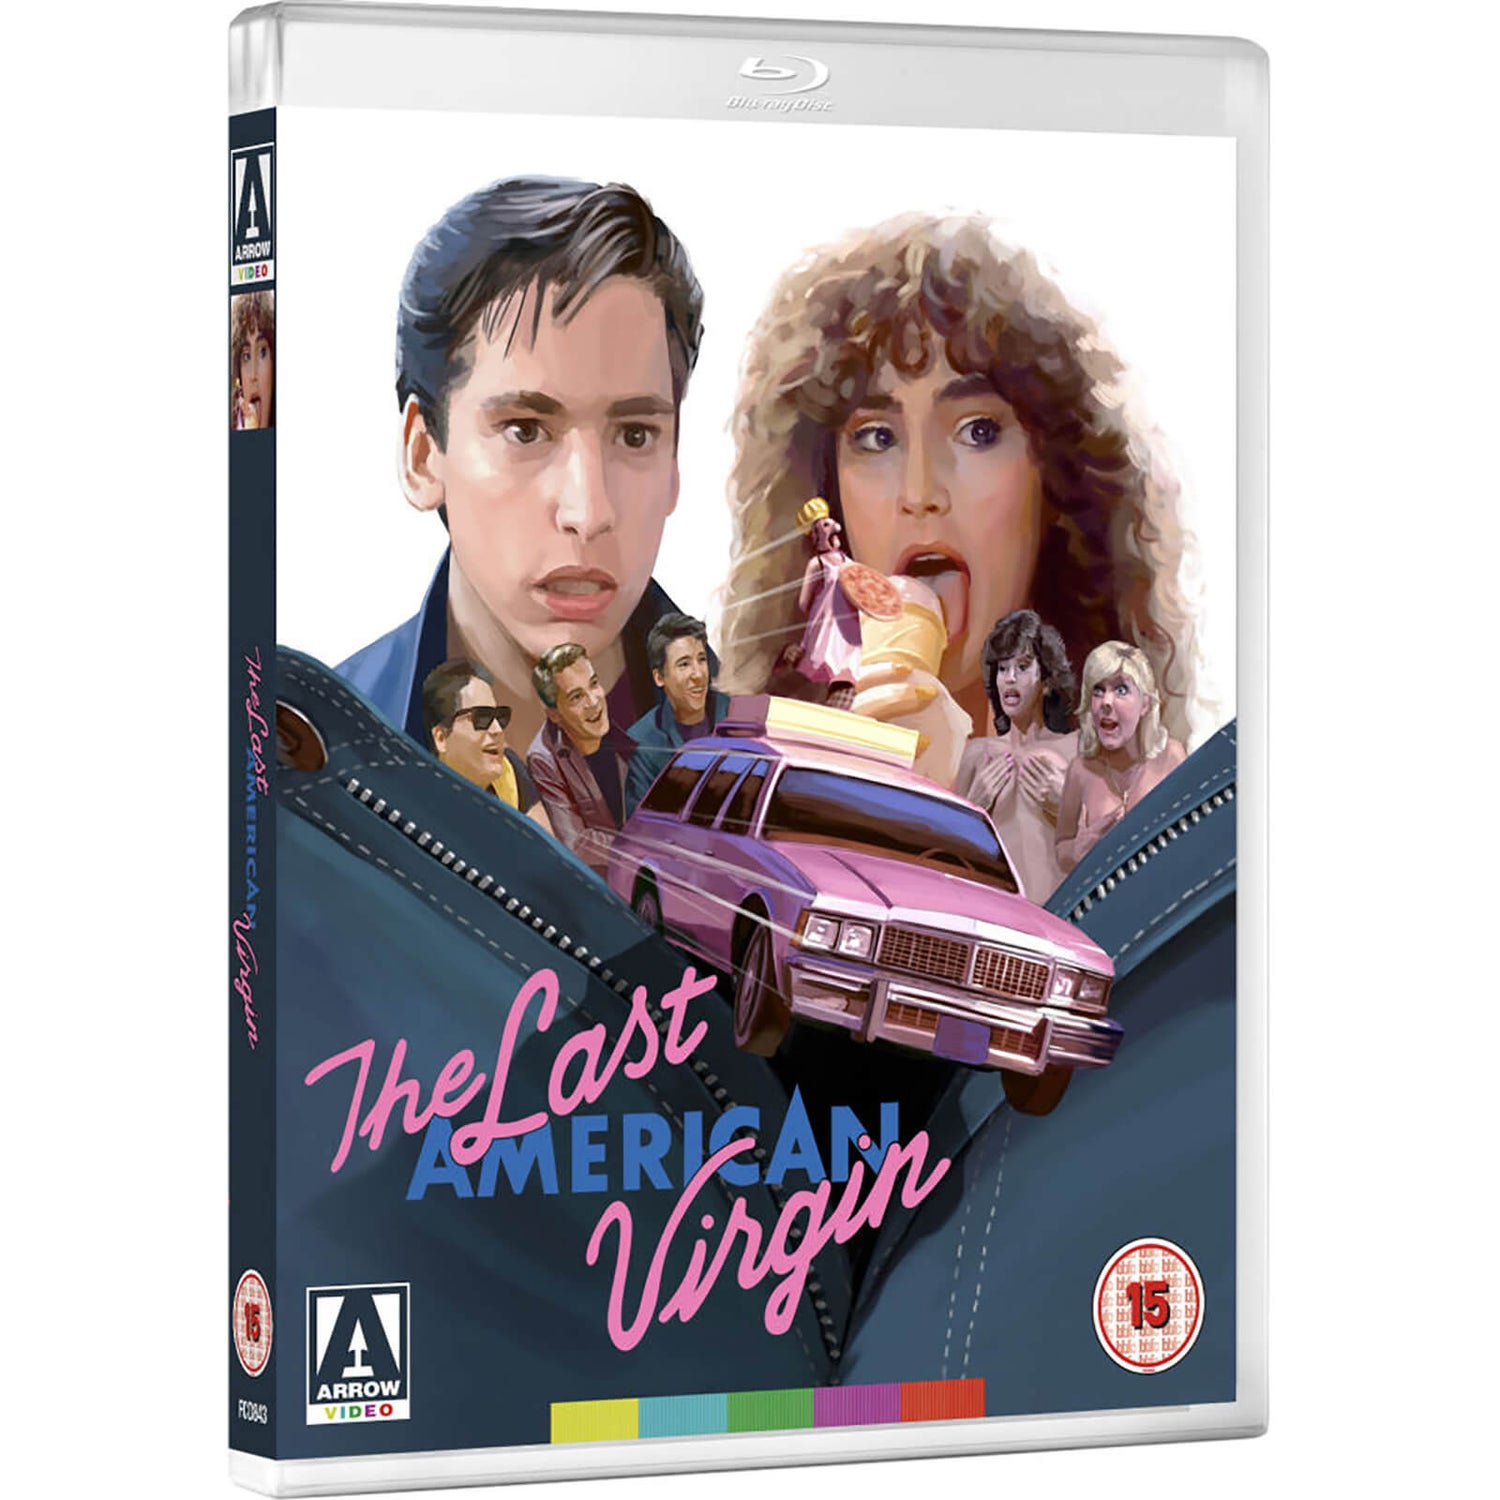 The Last American Virgin - Dual Format Edition